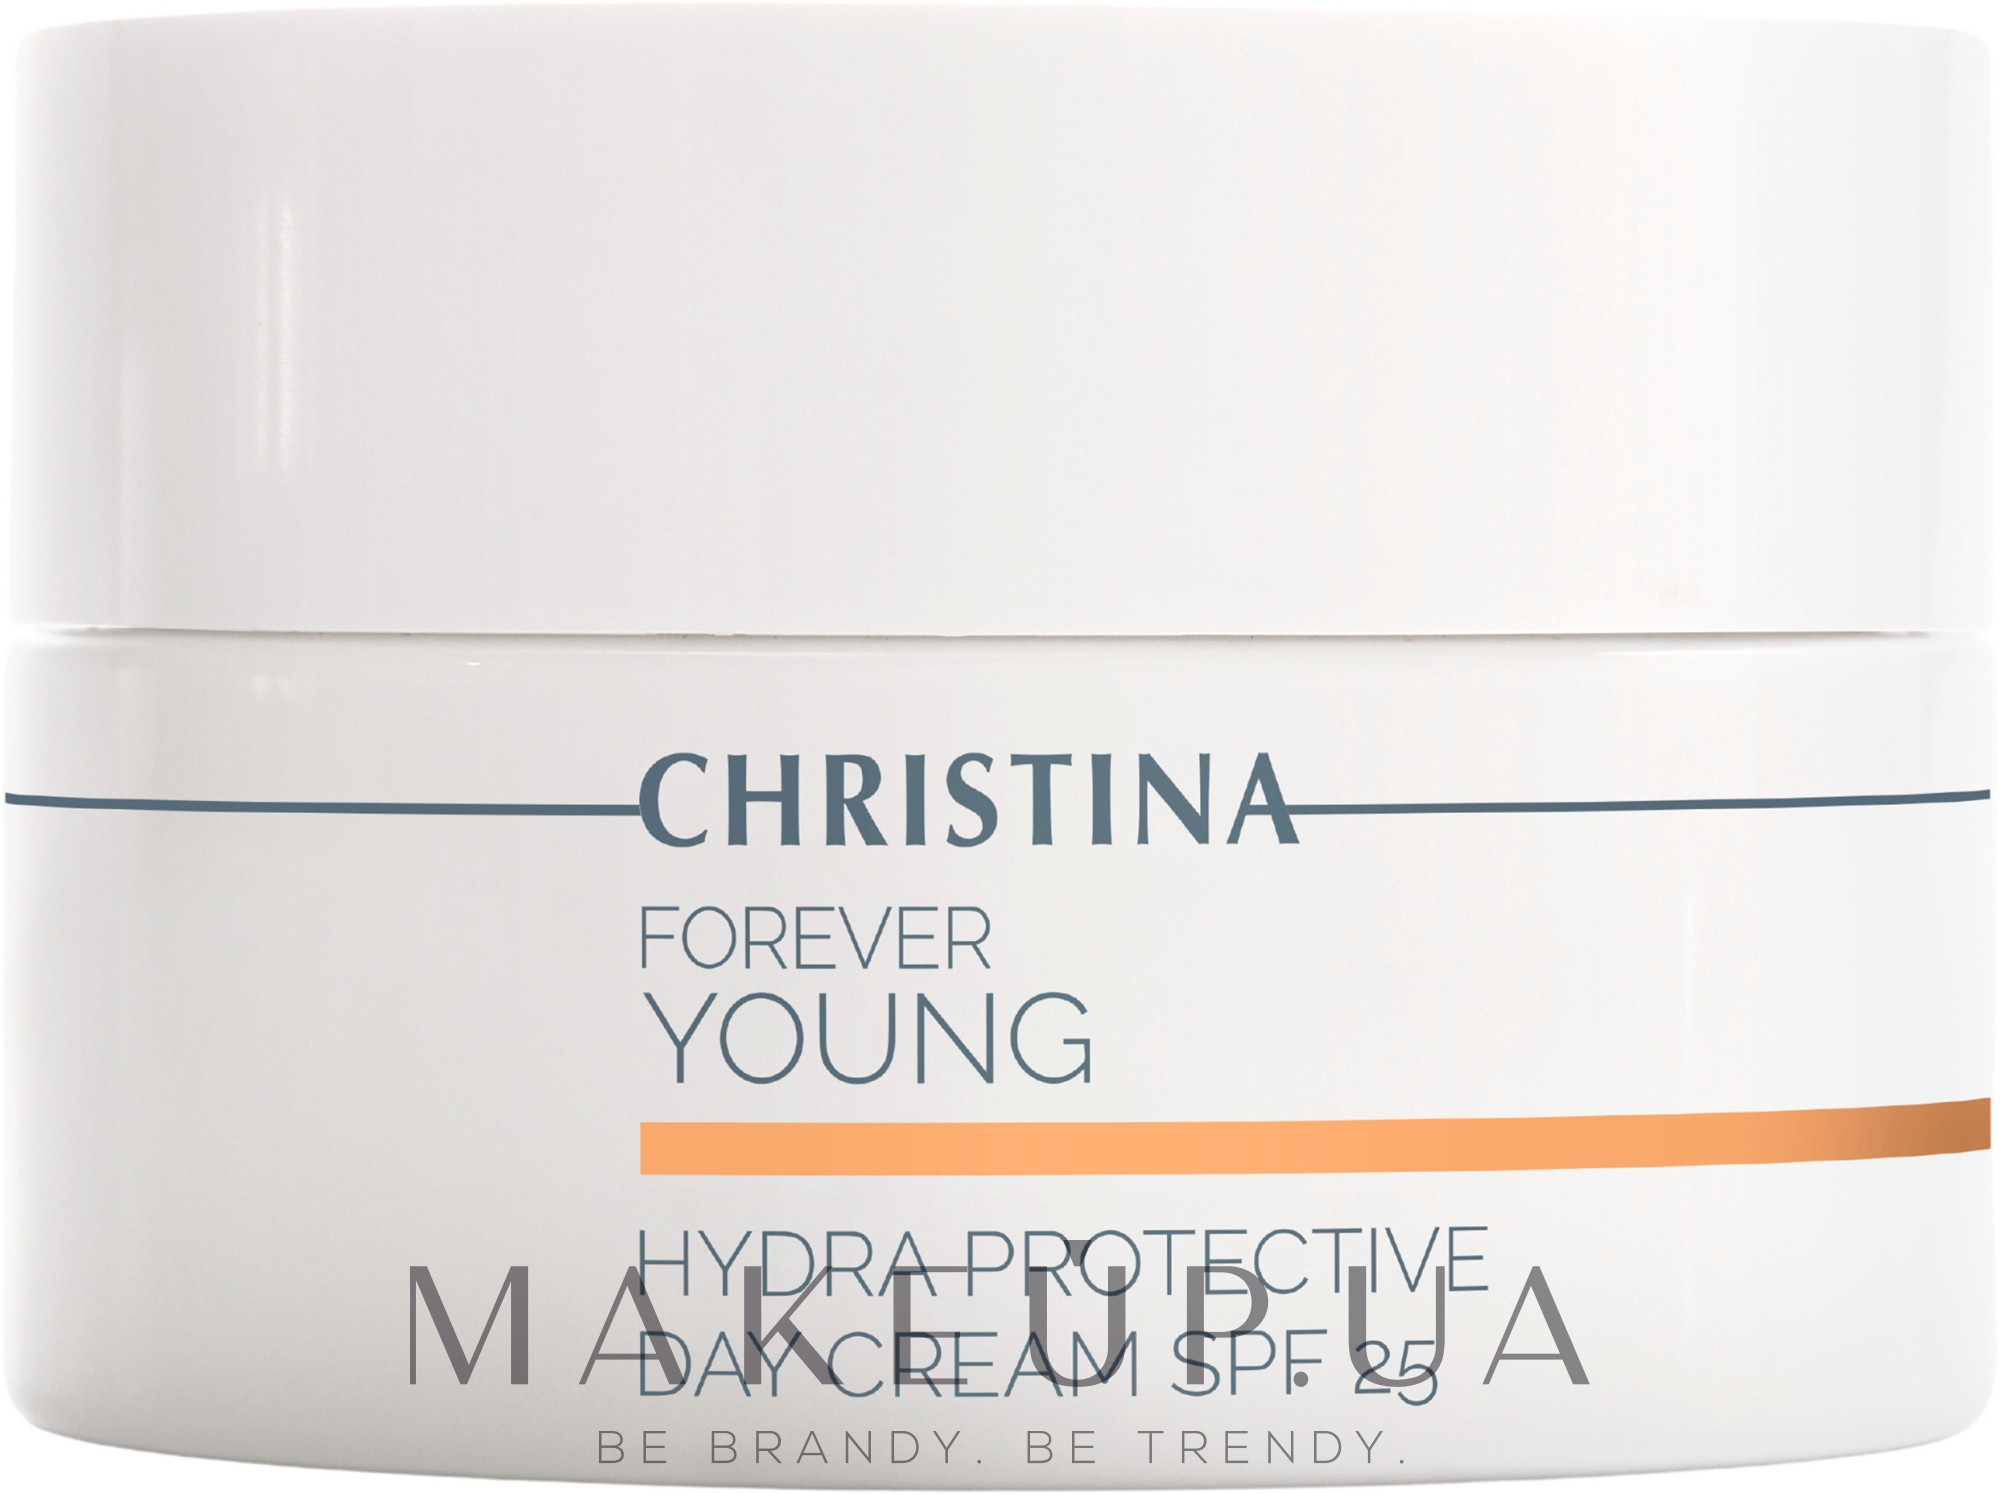 Дневной гидрозащитный крем - Christina Forever Young Hydra Protective Day Cream SPF25 — фото 50ml